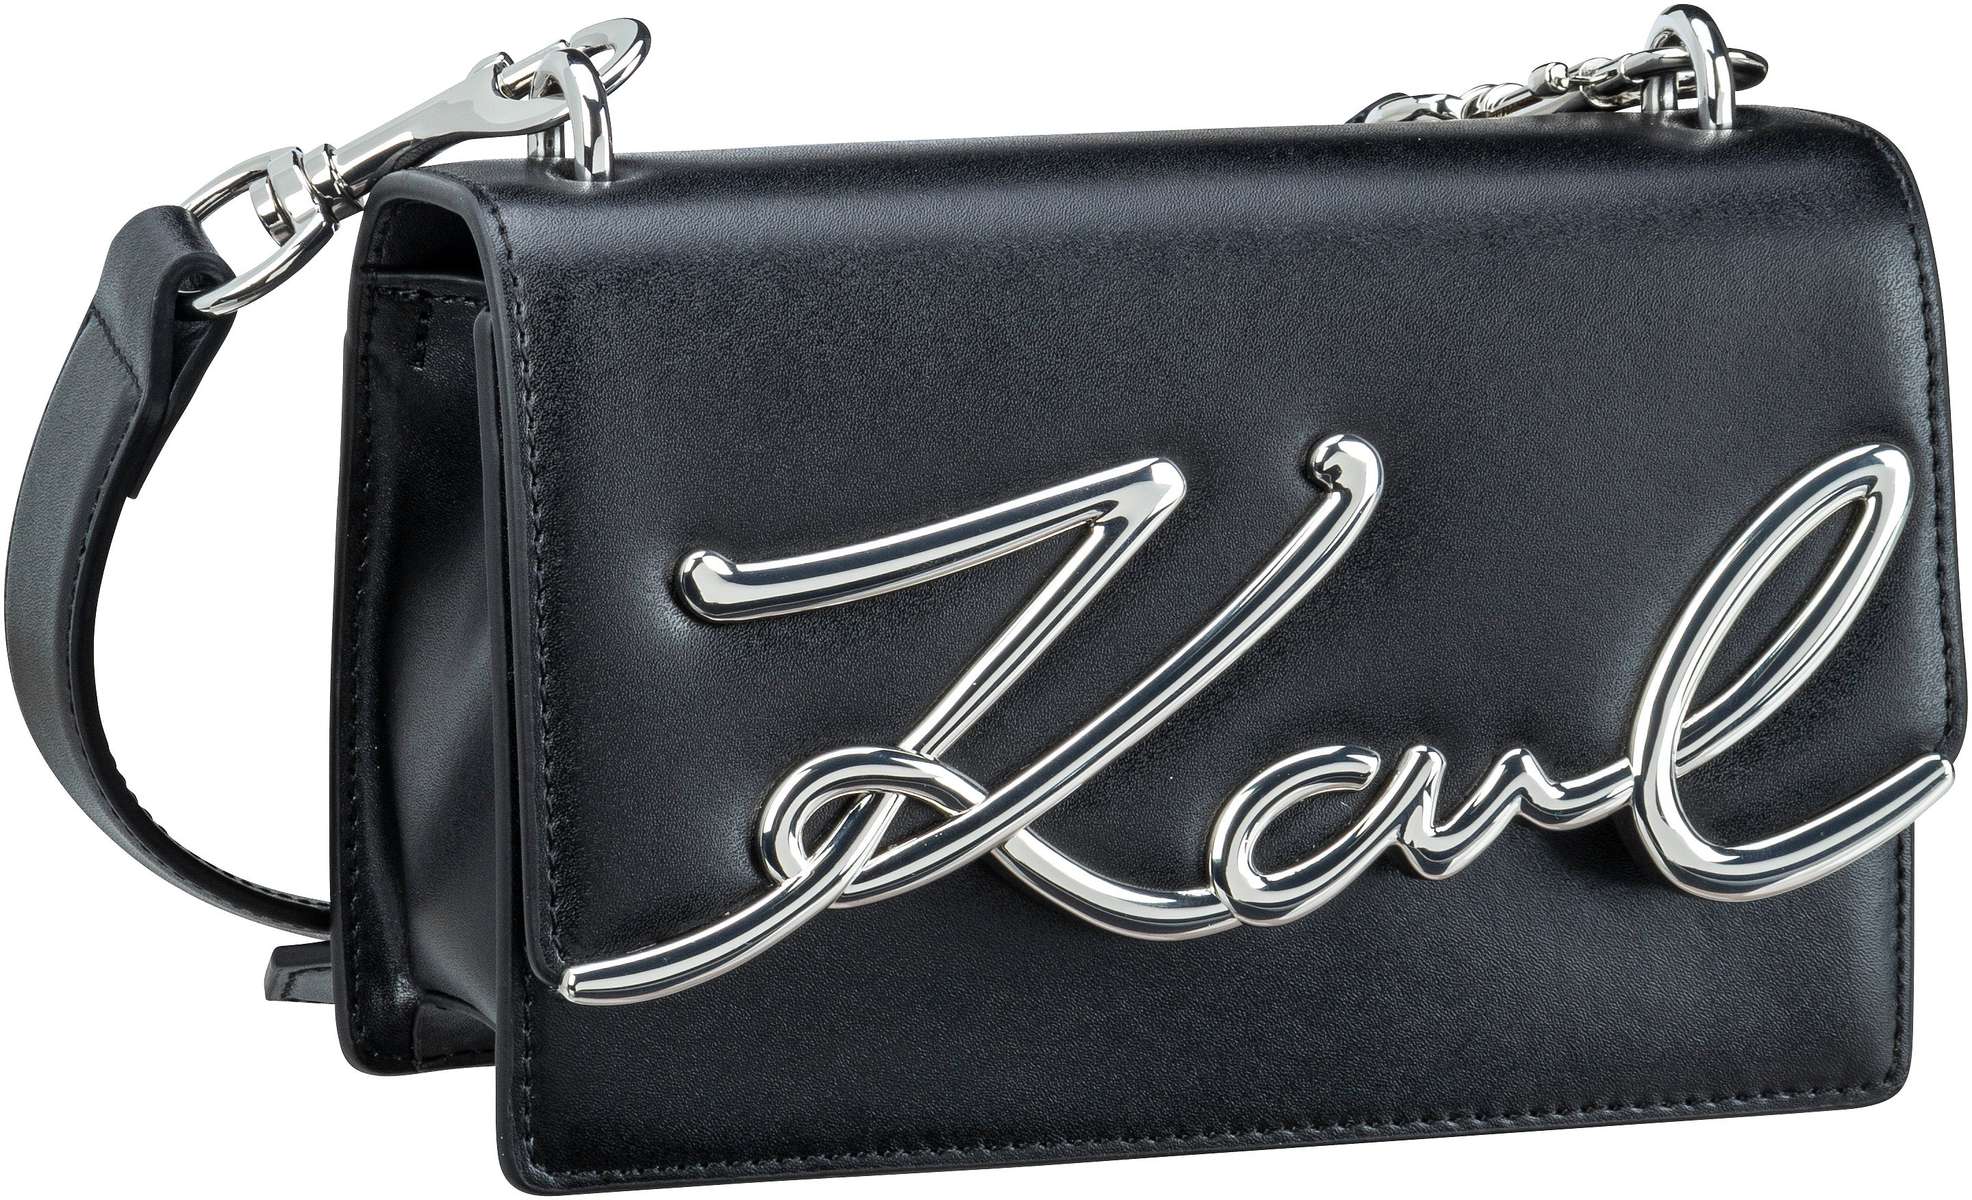 Karl Lagerfeld K/Signature Small Shoulderbag - Black/Nickel